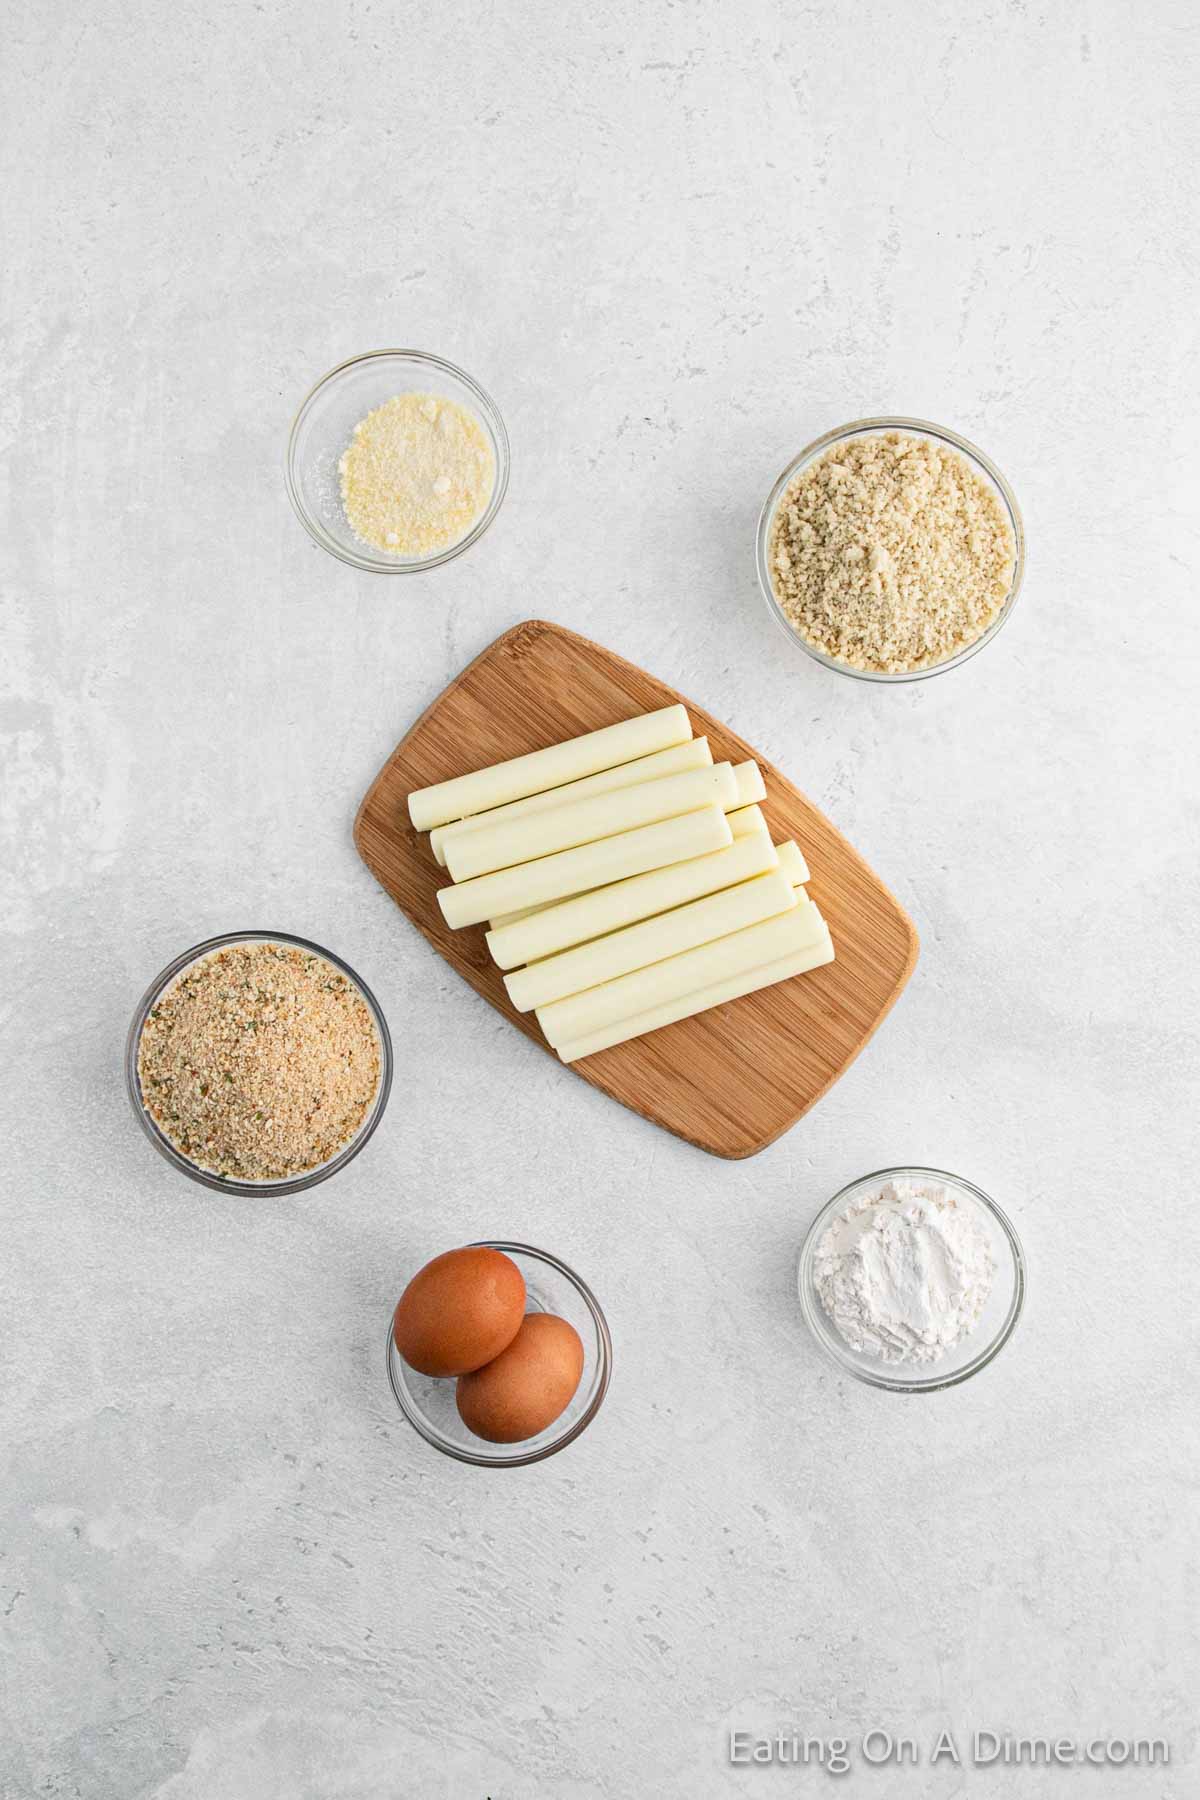 Mozzarella Sticks ingredients - cheese sticks, flour, eggs, Italian Bread Crumbs, Panko Bread Crumbs, Parmesan Chese